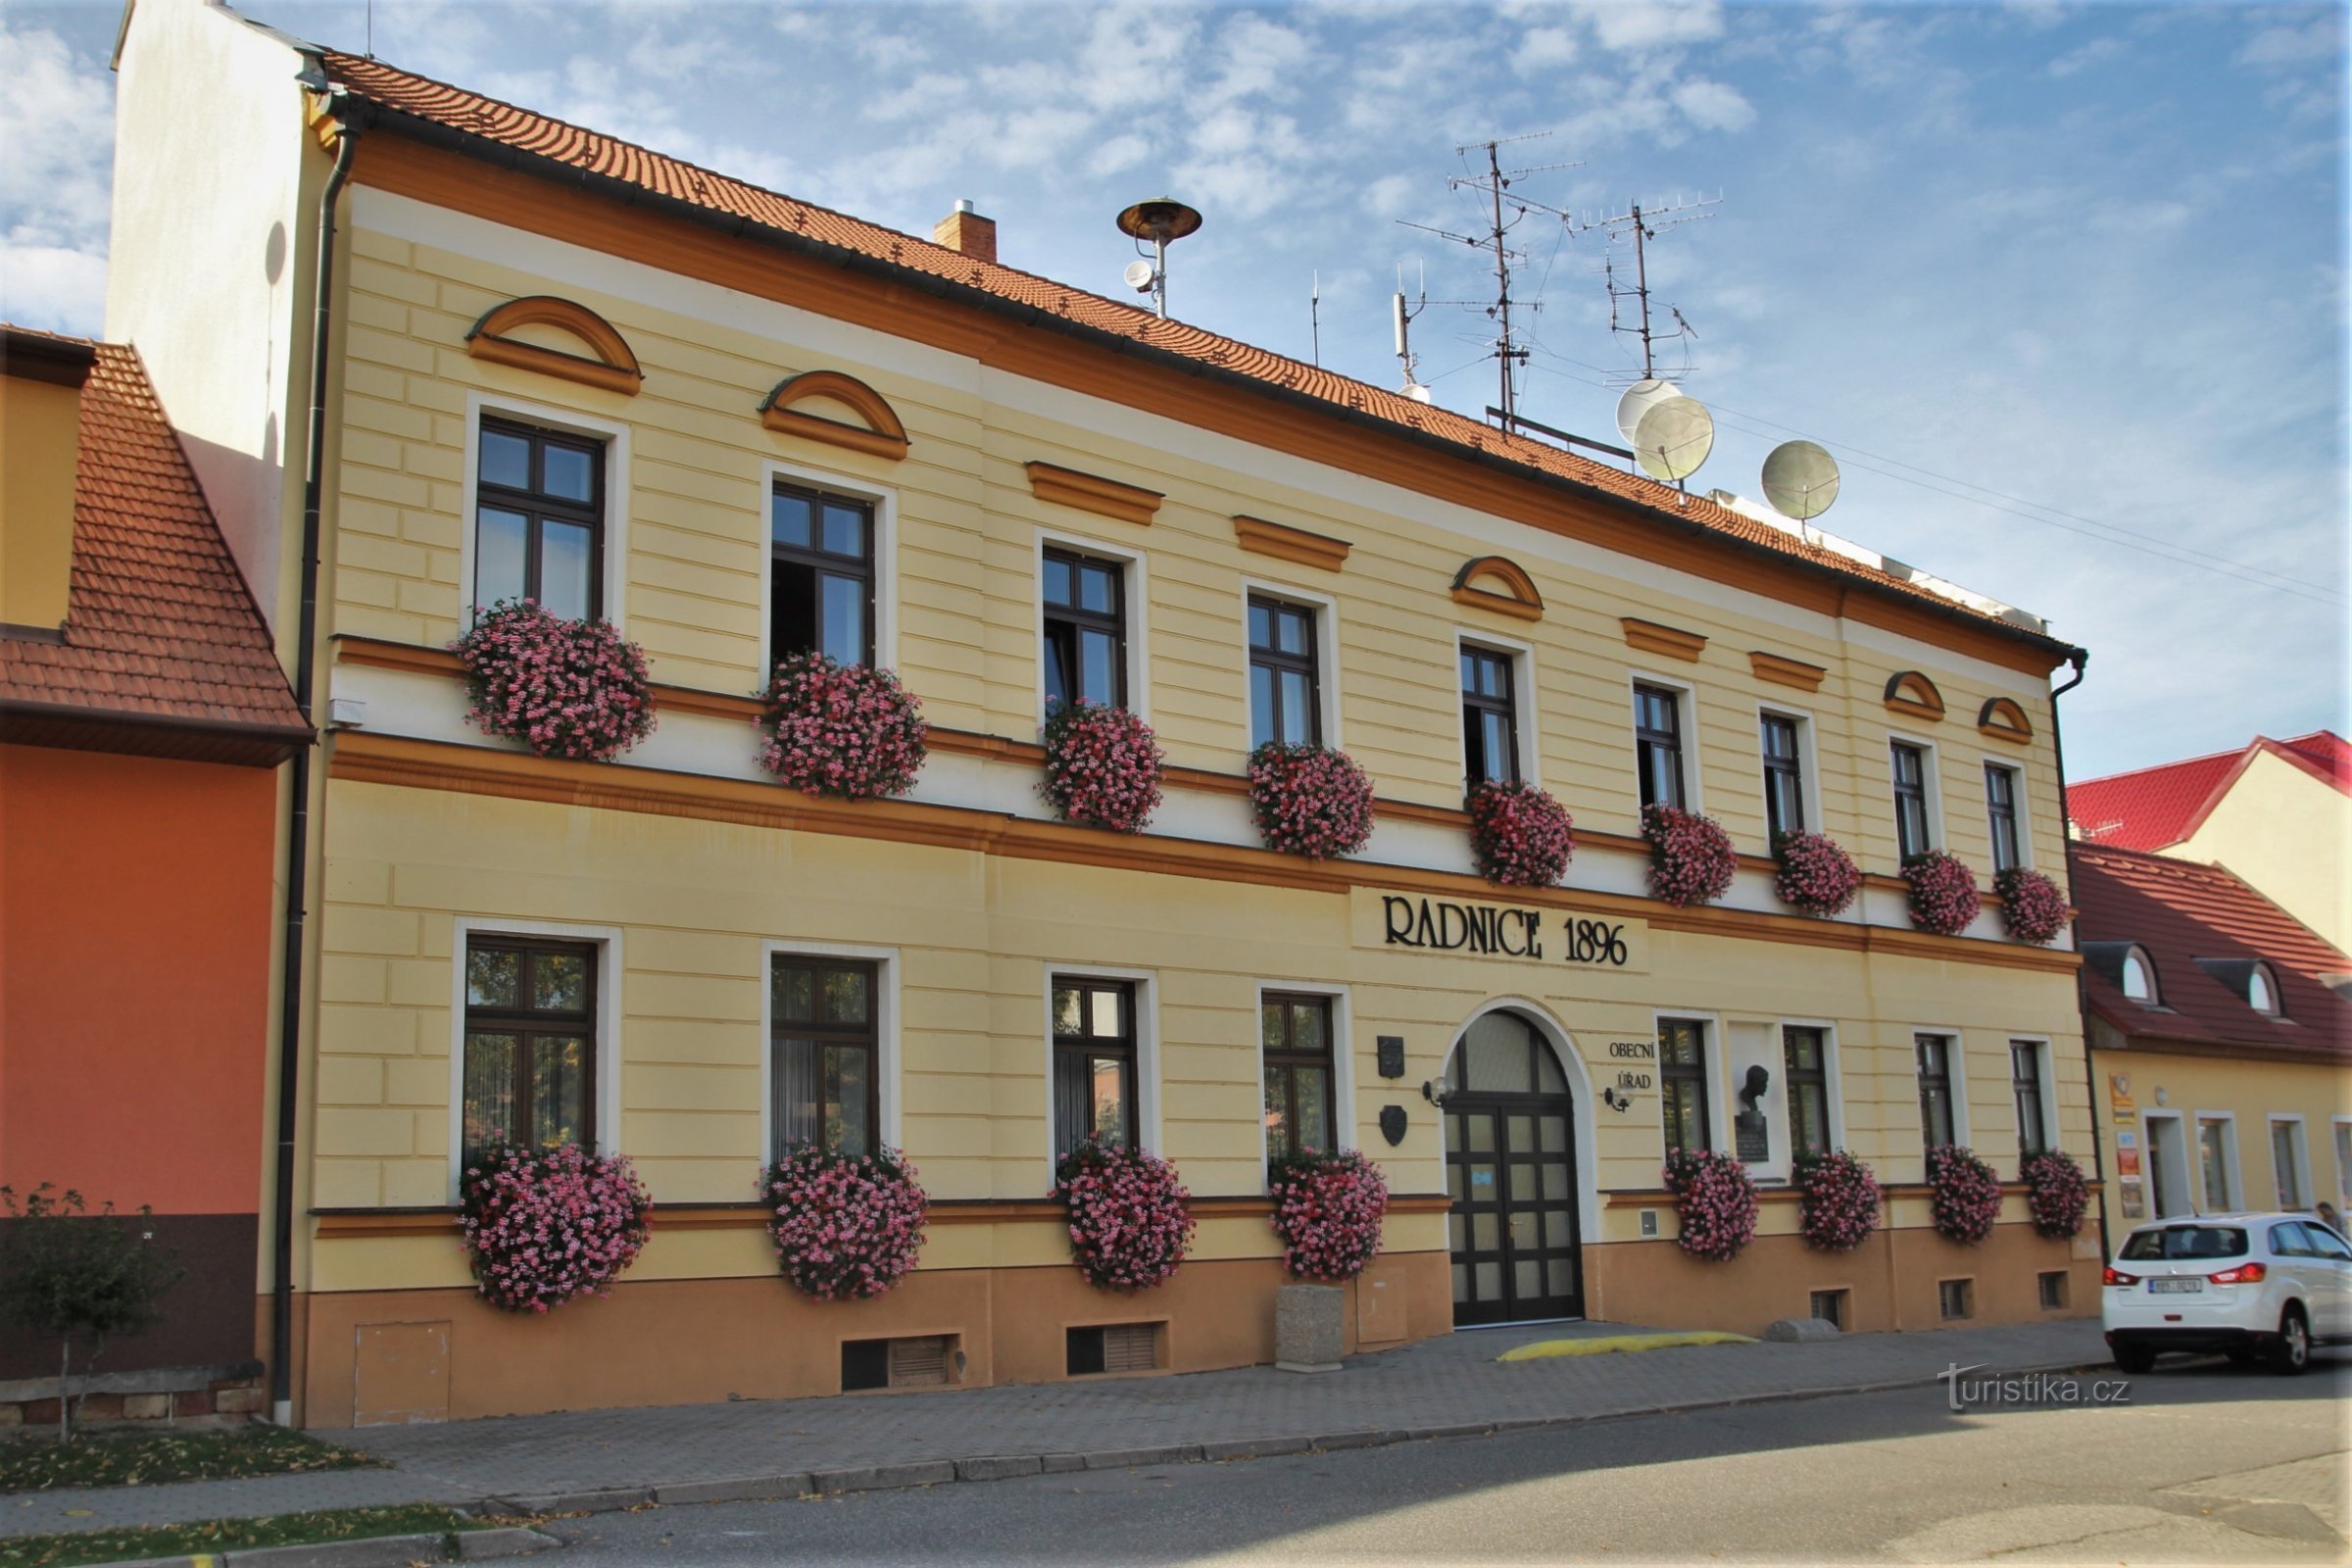 Mutěnice - town hall building